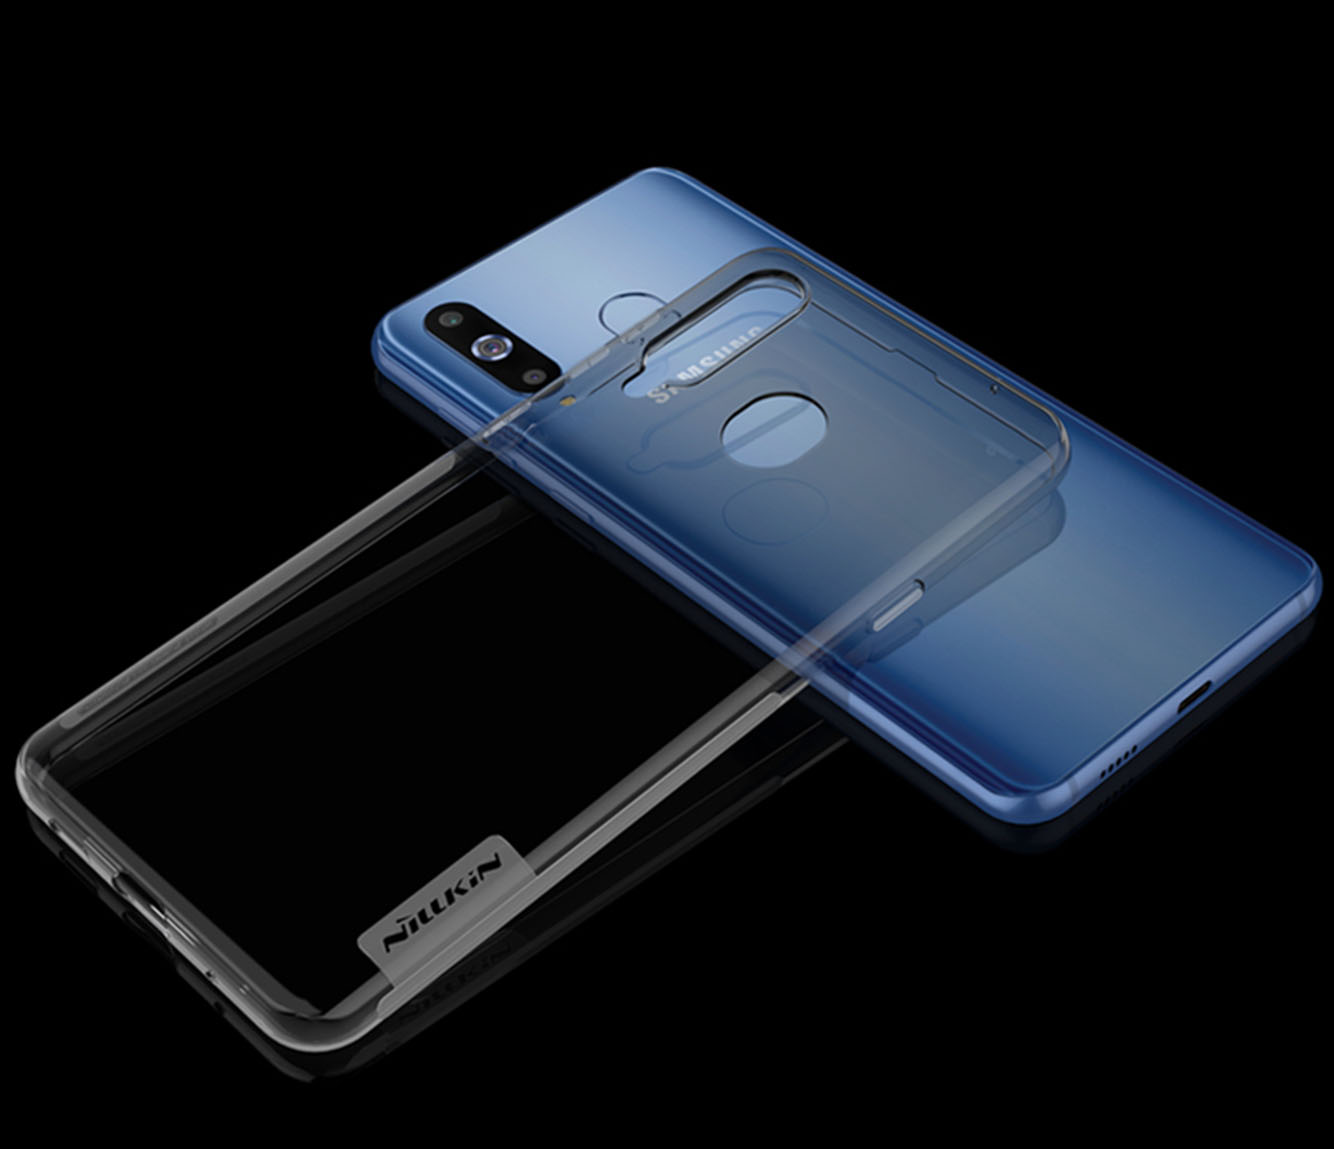 Samsung Galaxy A8s case